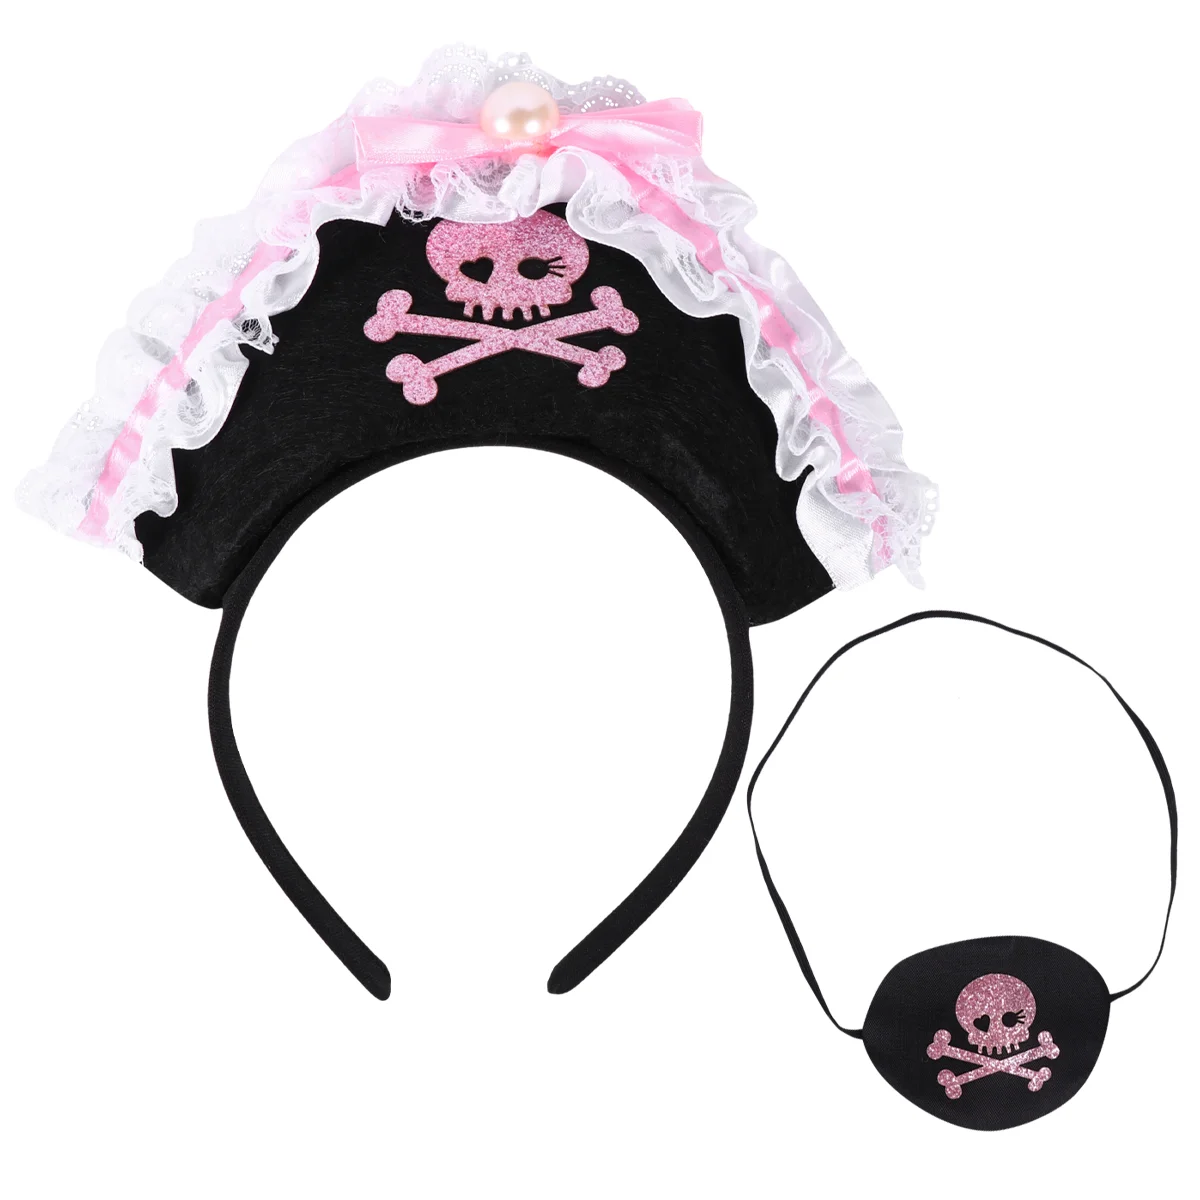 

2 Pcs Halloween Headband Pirate Hair Party Mini Tiara Children's Place Girls Clothes Aldult